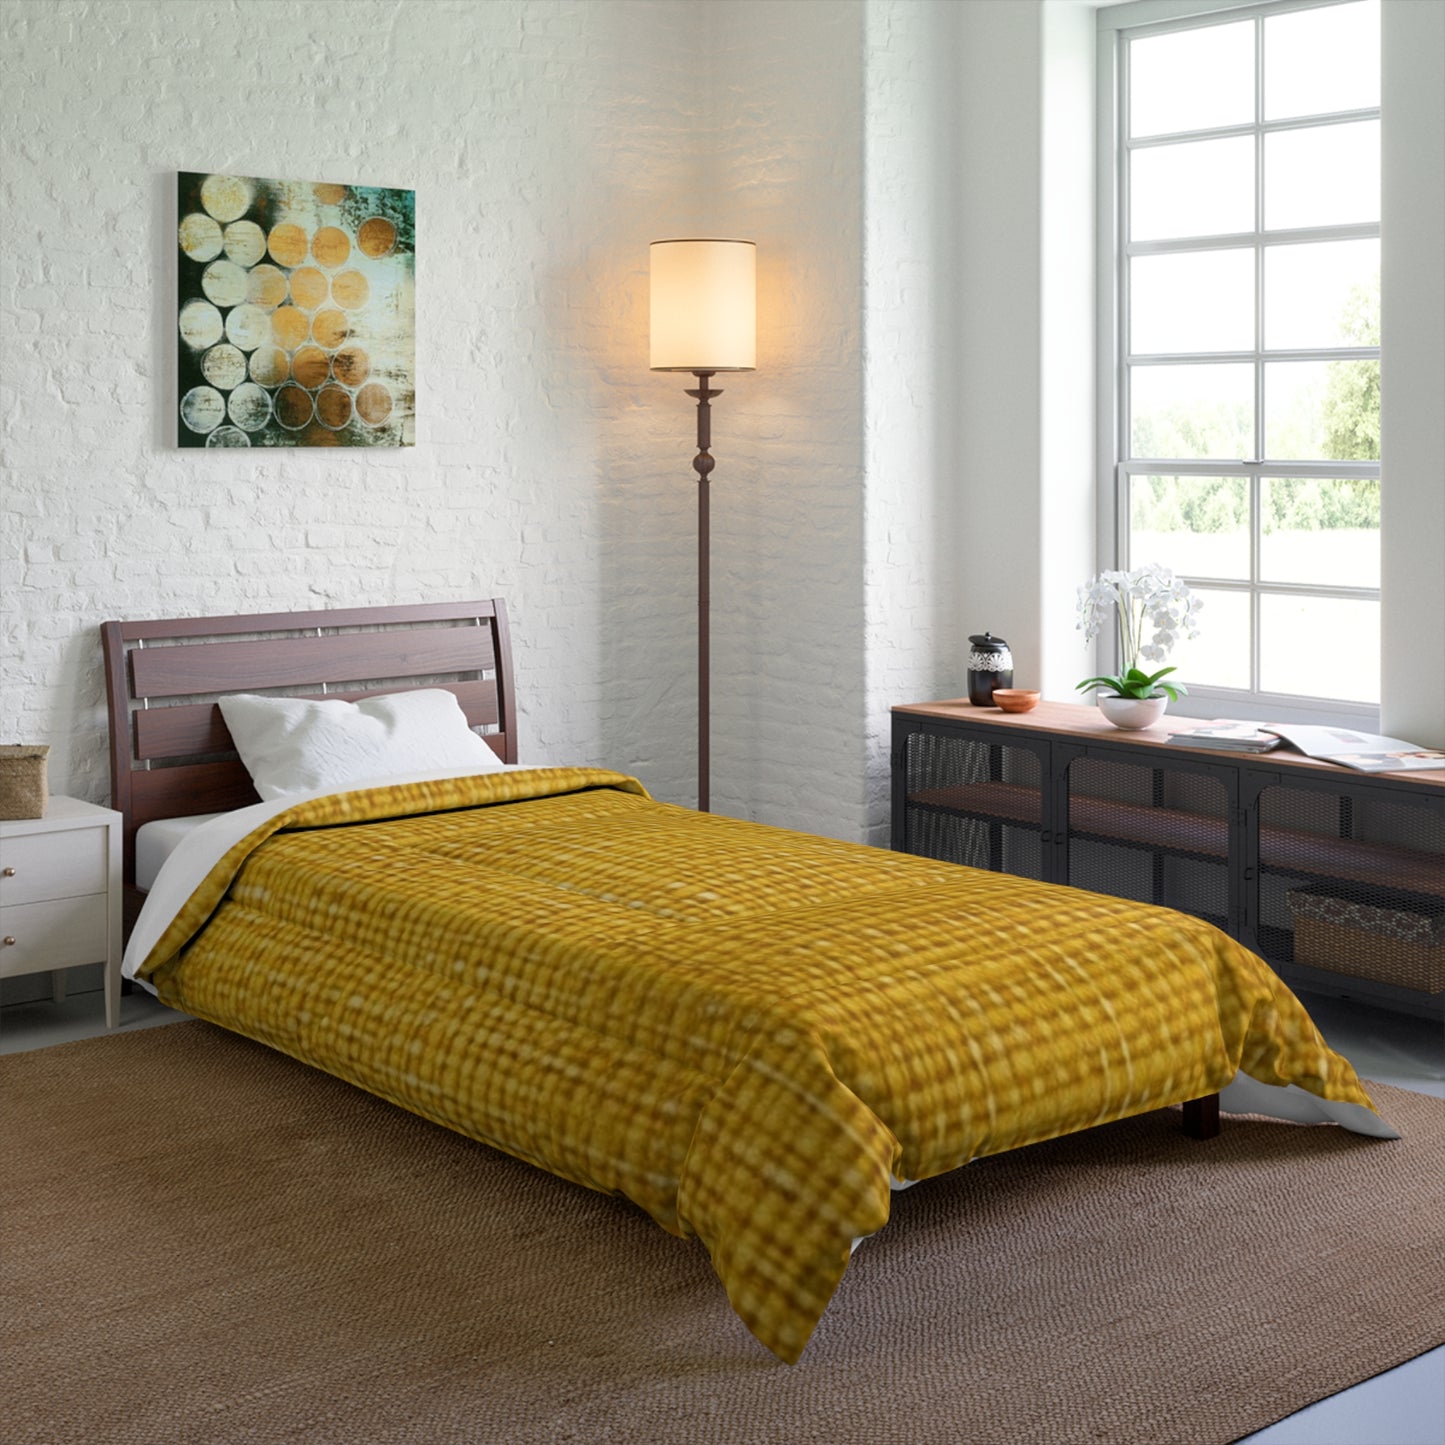 Radiant Sunny Yellow: Denim-Inspired Summer Fabric - Comforter